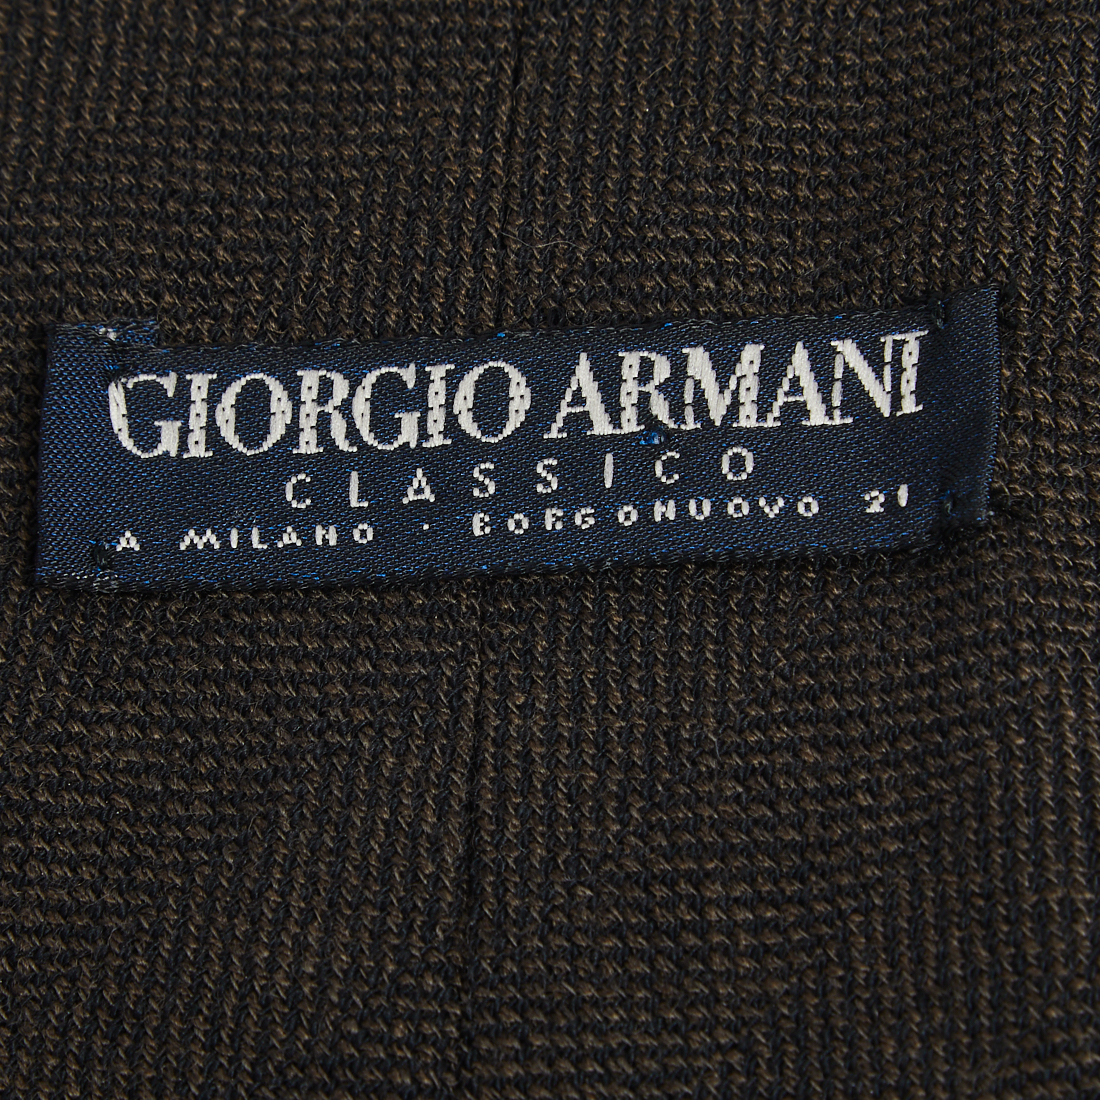 Giorgio Armani Classico Dark Brown Patterned Wool Knit Stitched Tie